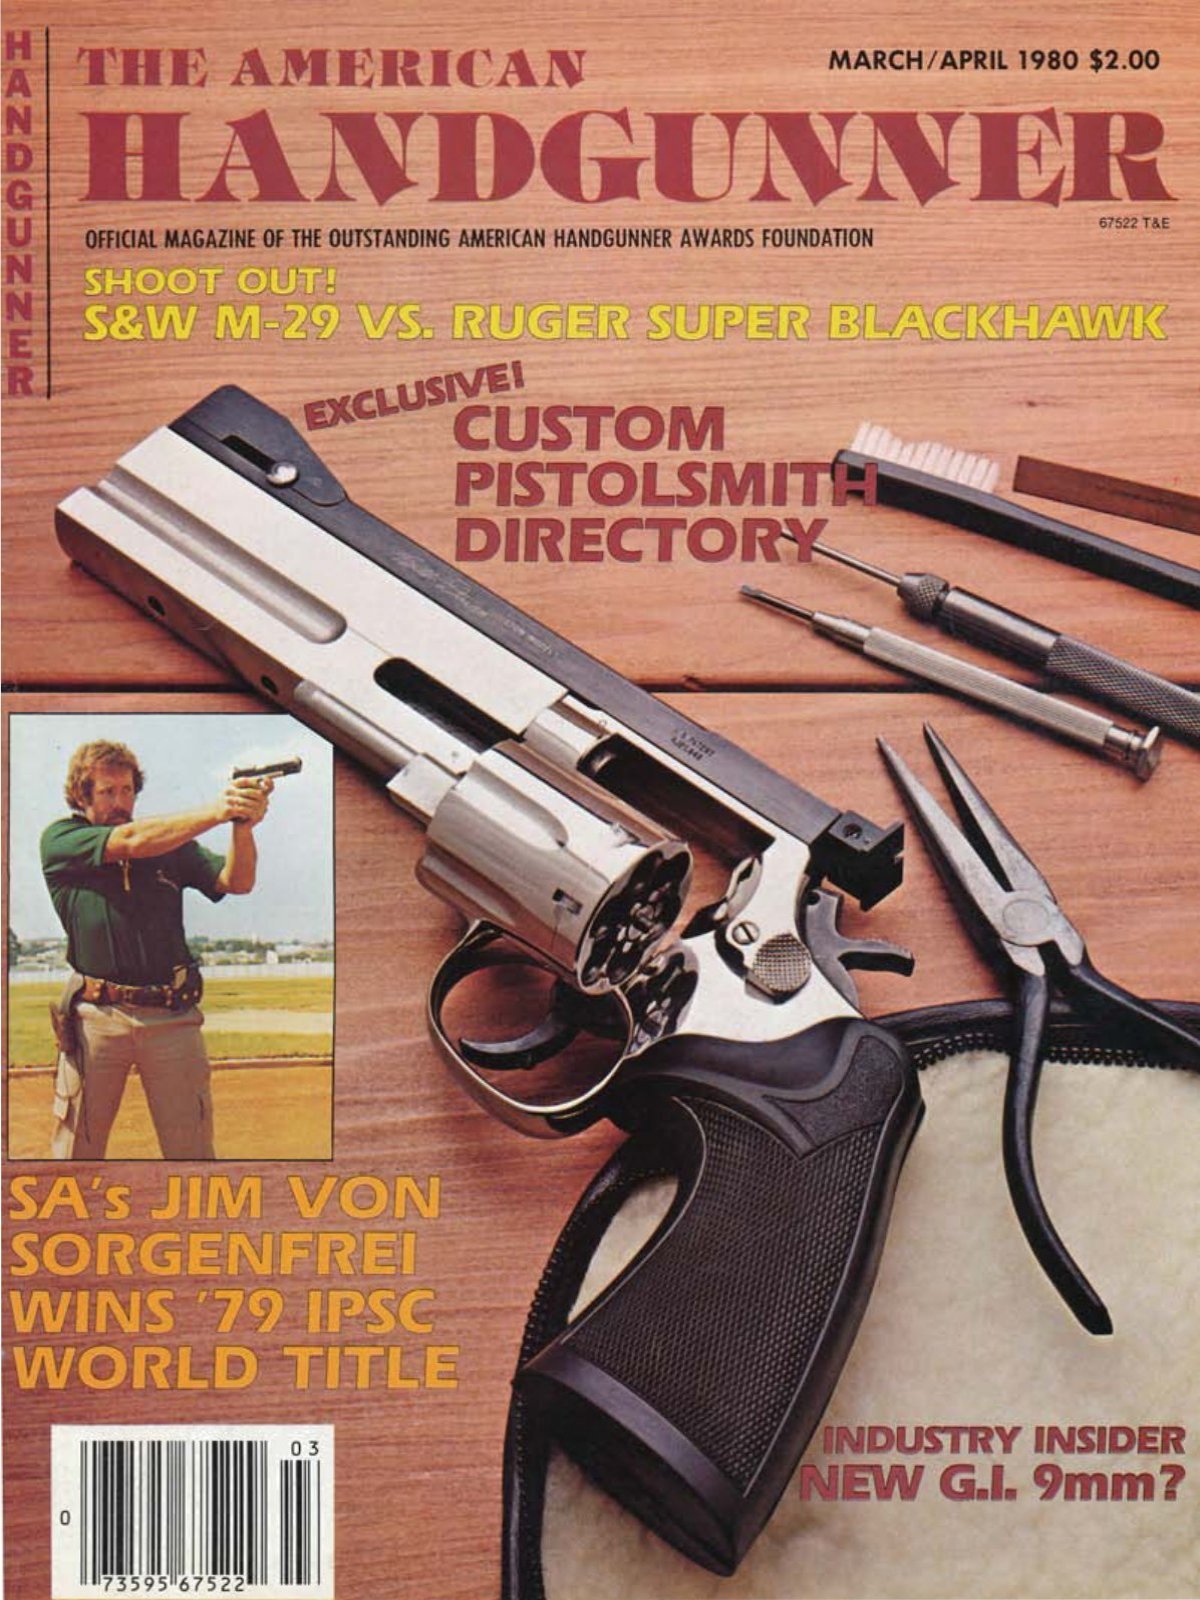 Sudden Attack gun poster, An A2 poster design consisting th…